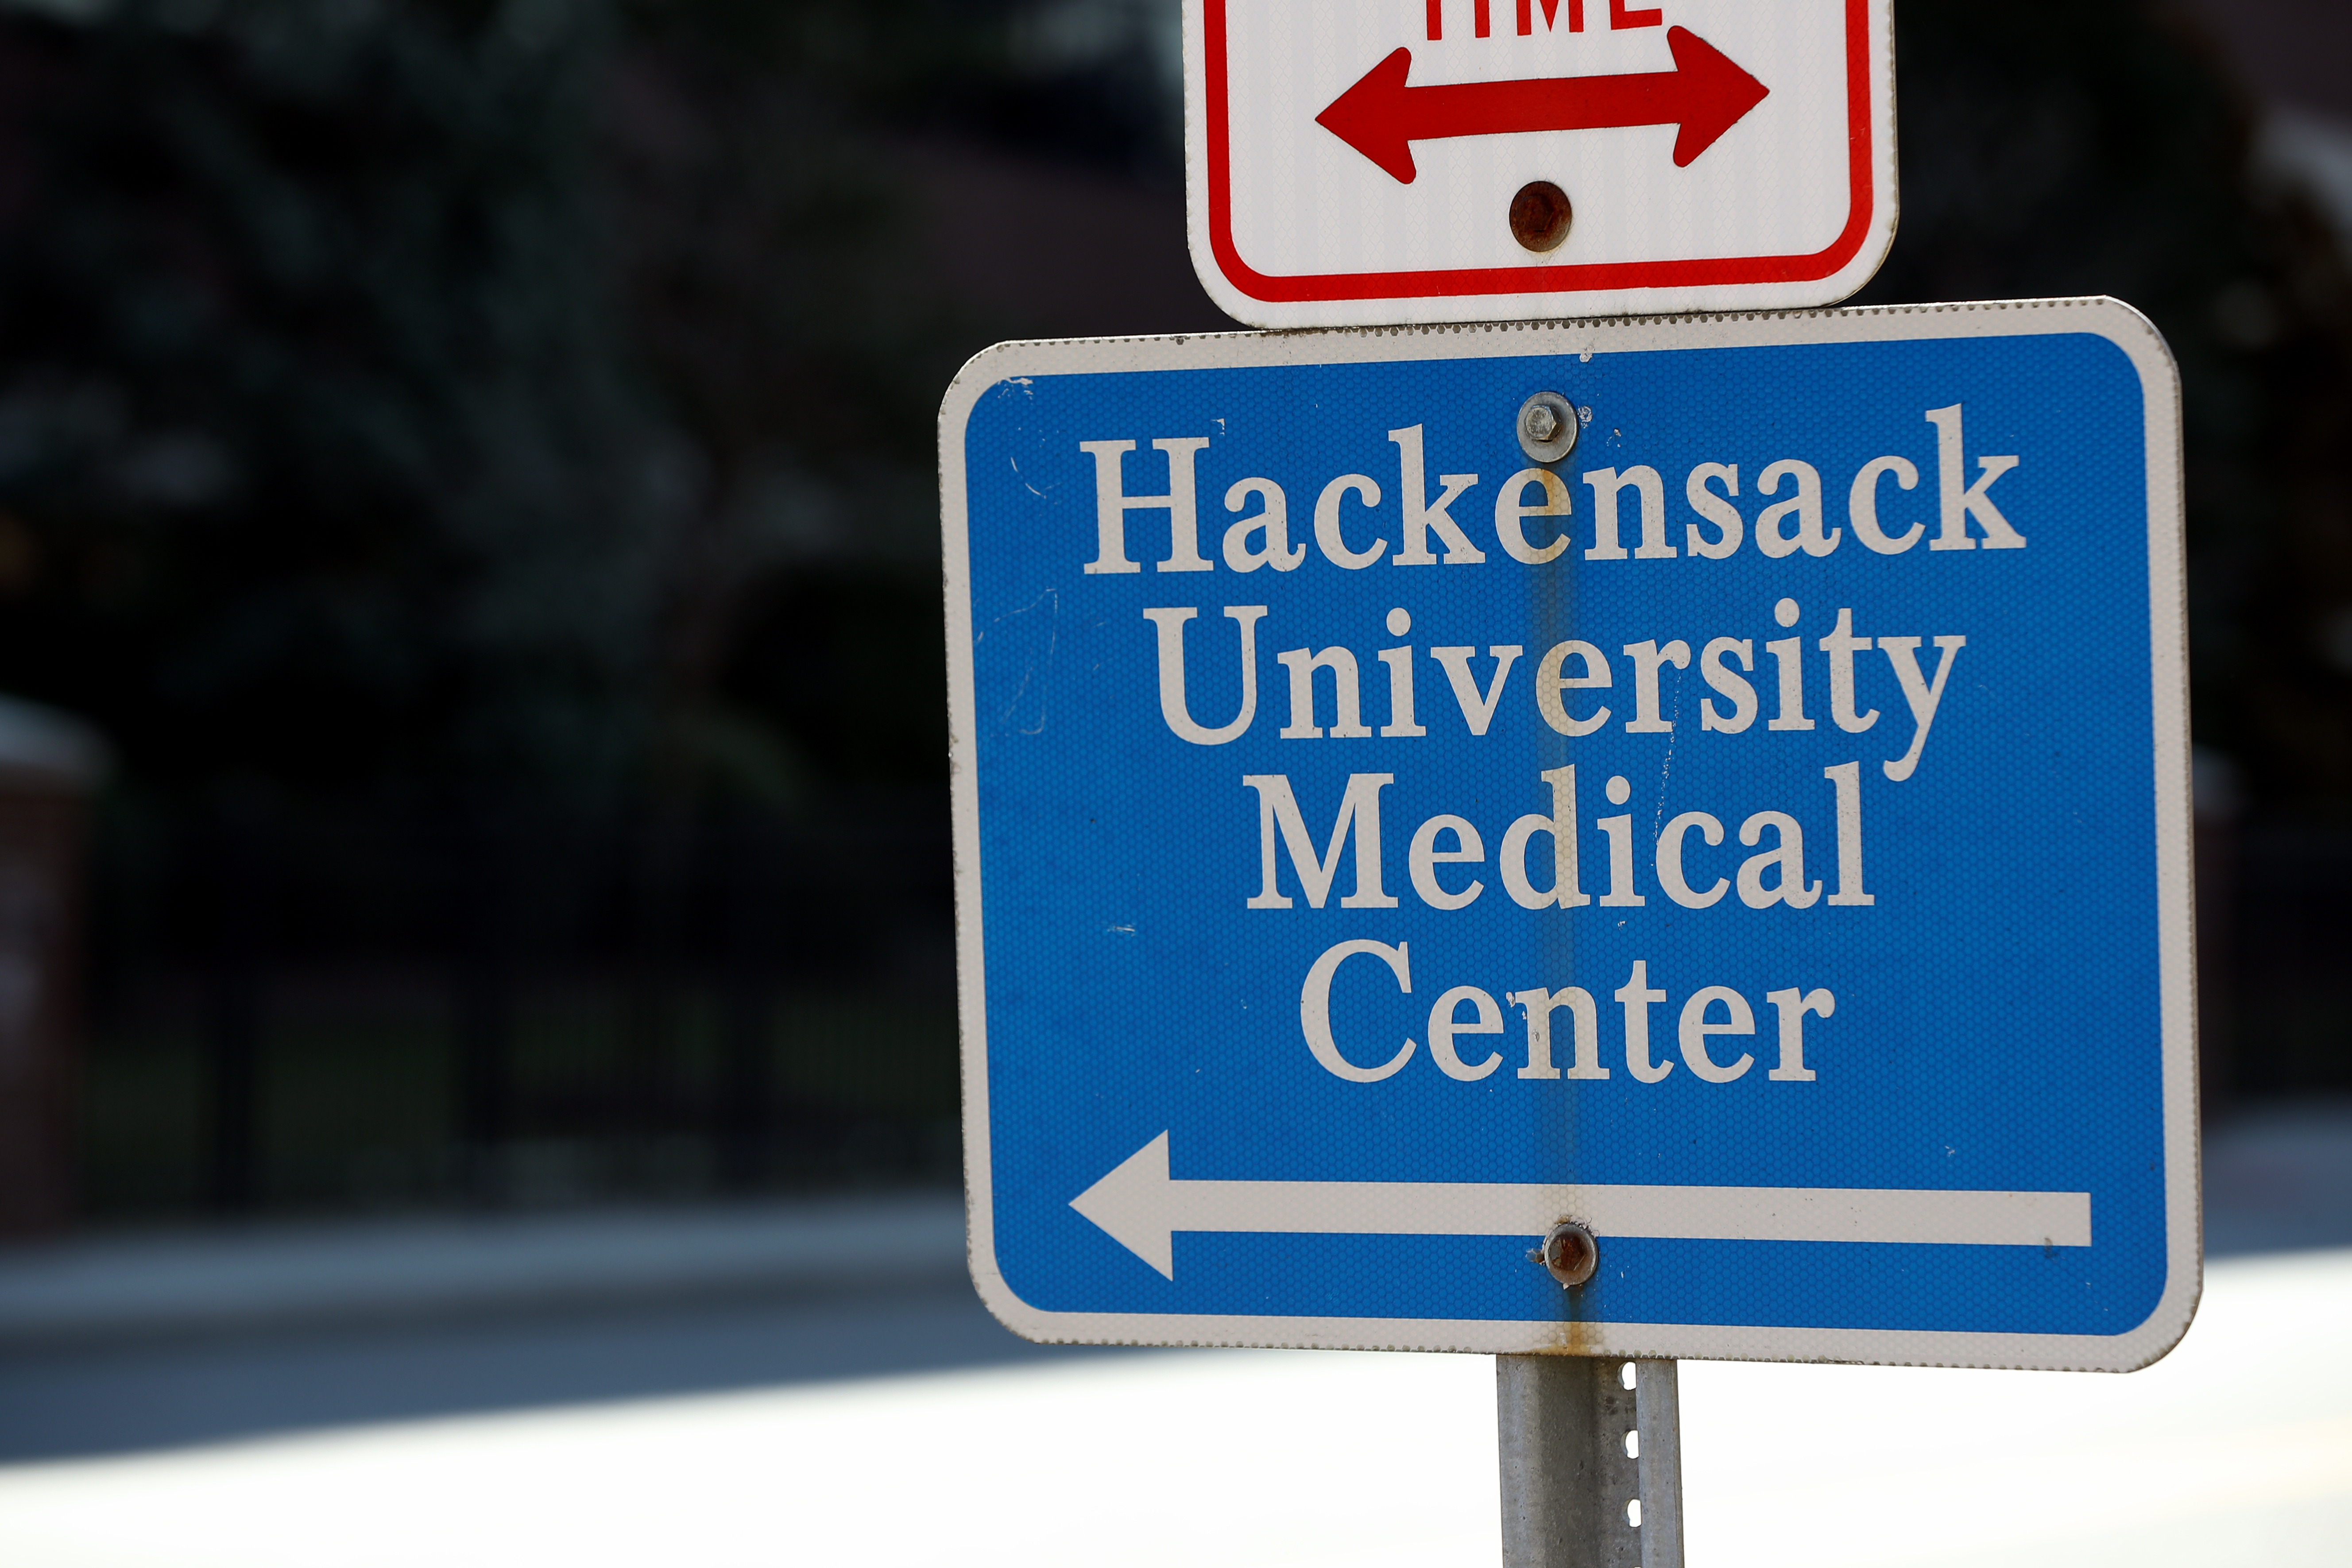 The sign outside Hackensack University Medical Center,